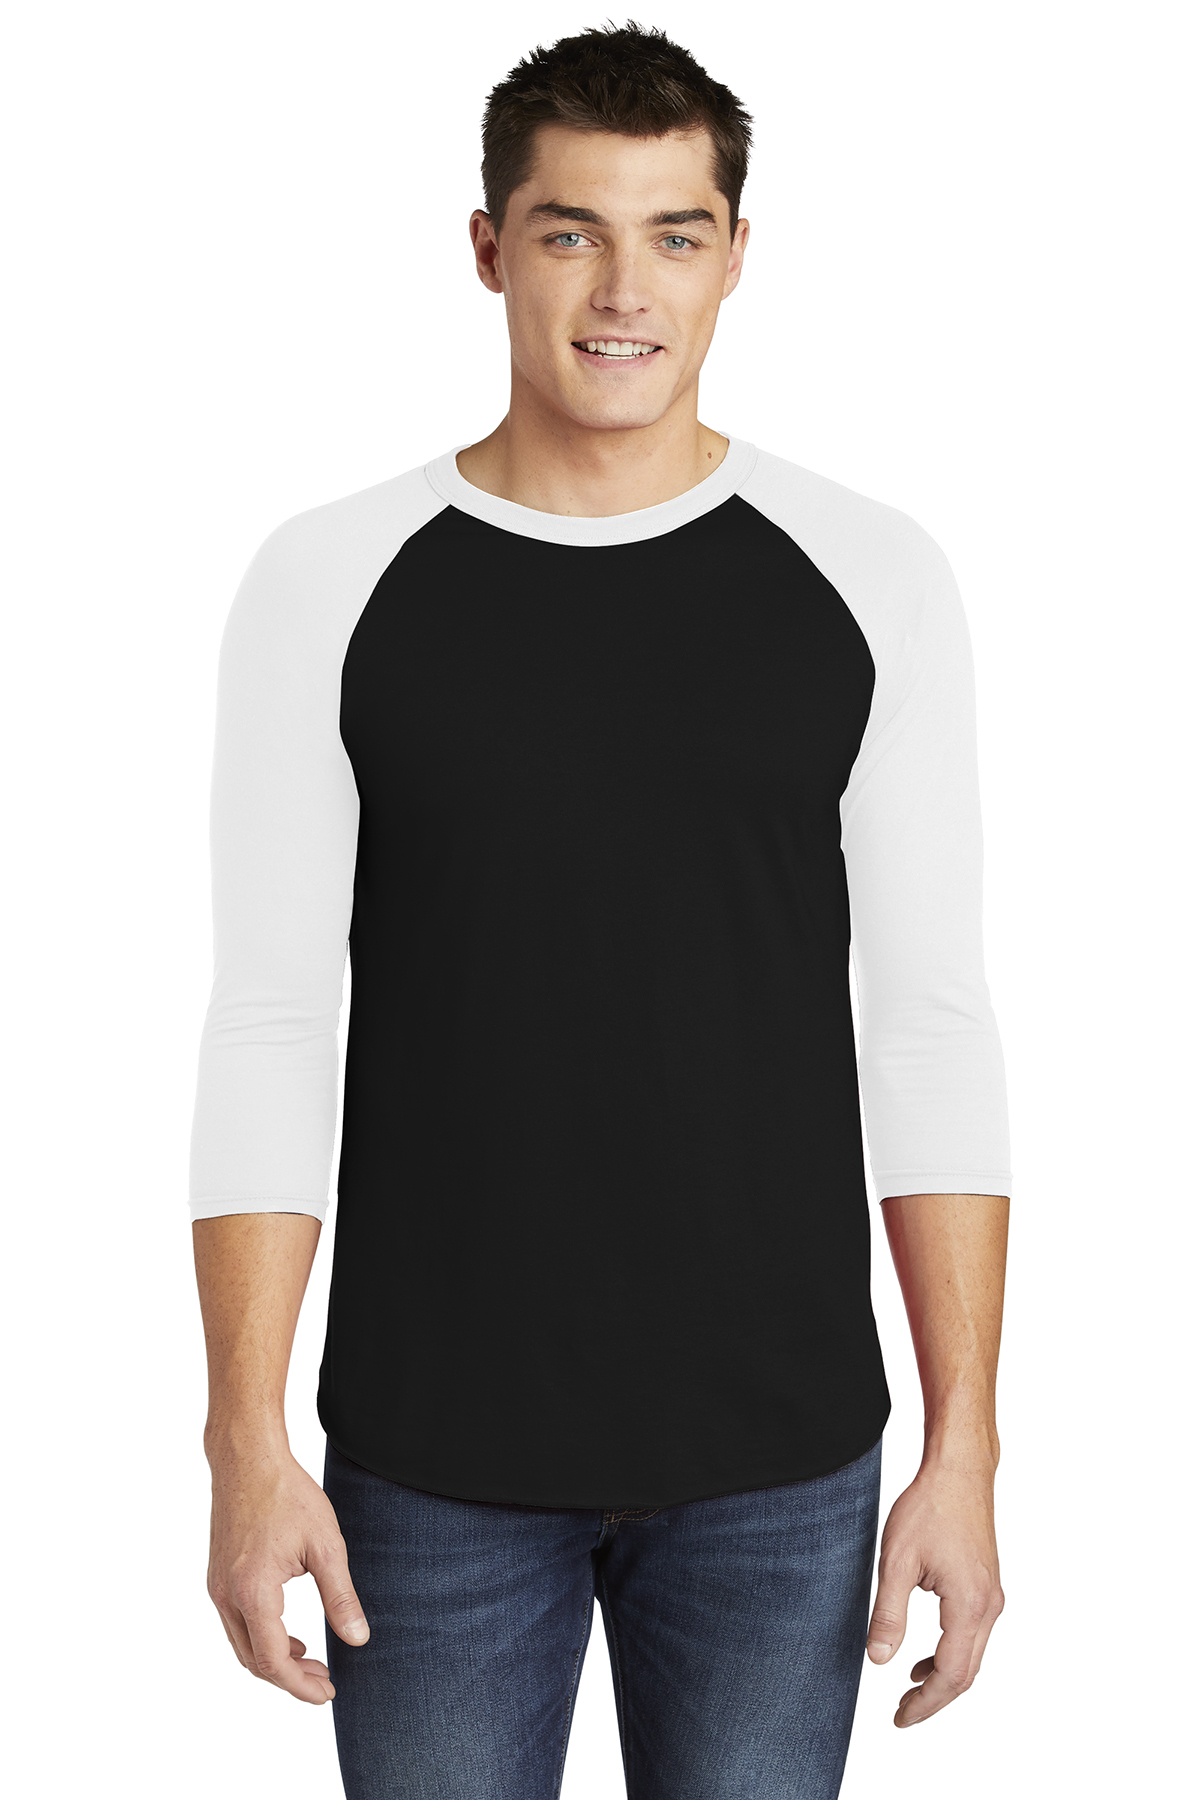 American Apparel Poly-Cotton 3/4-Sleeve Raglan T-Shirt | Product | SanMar